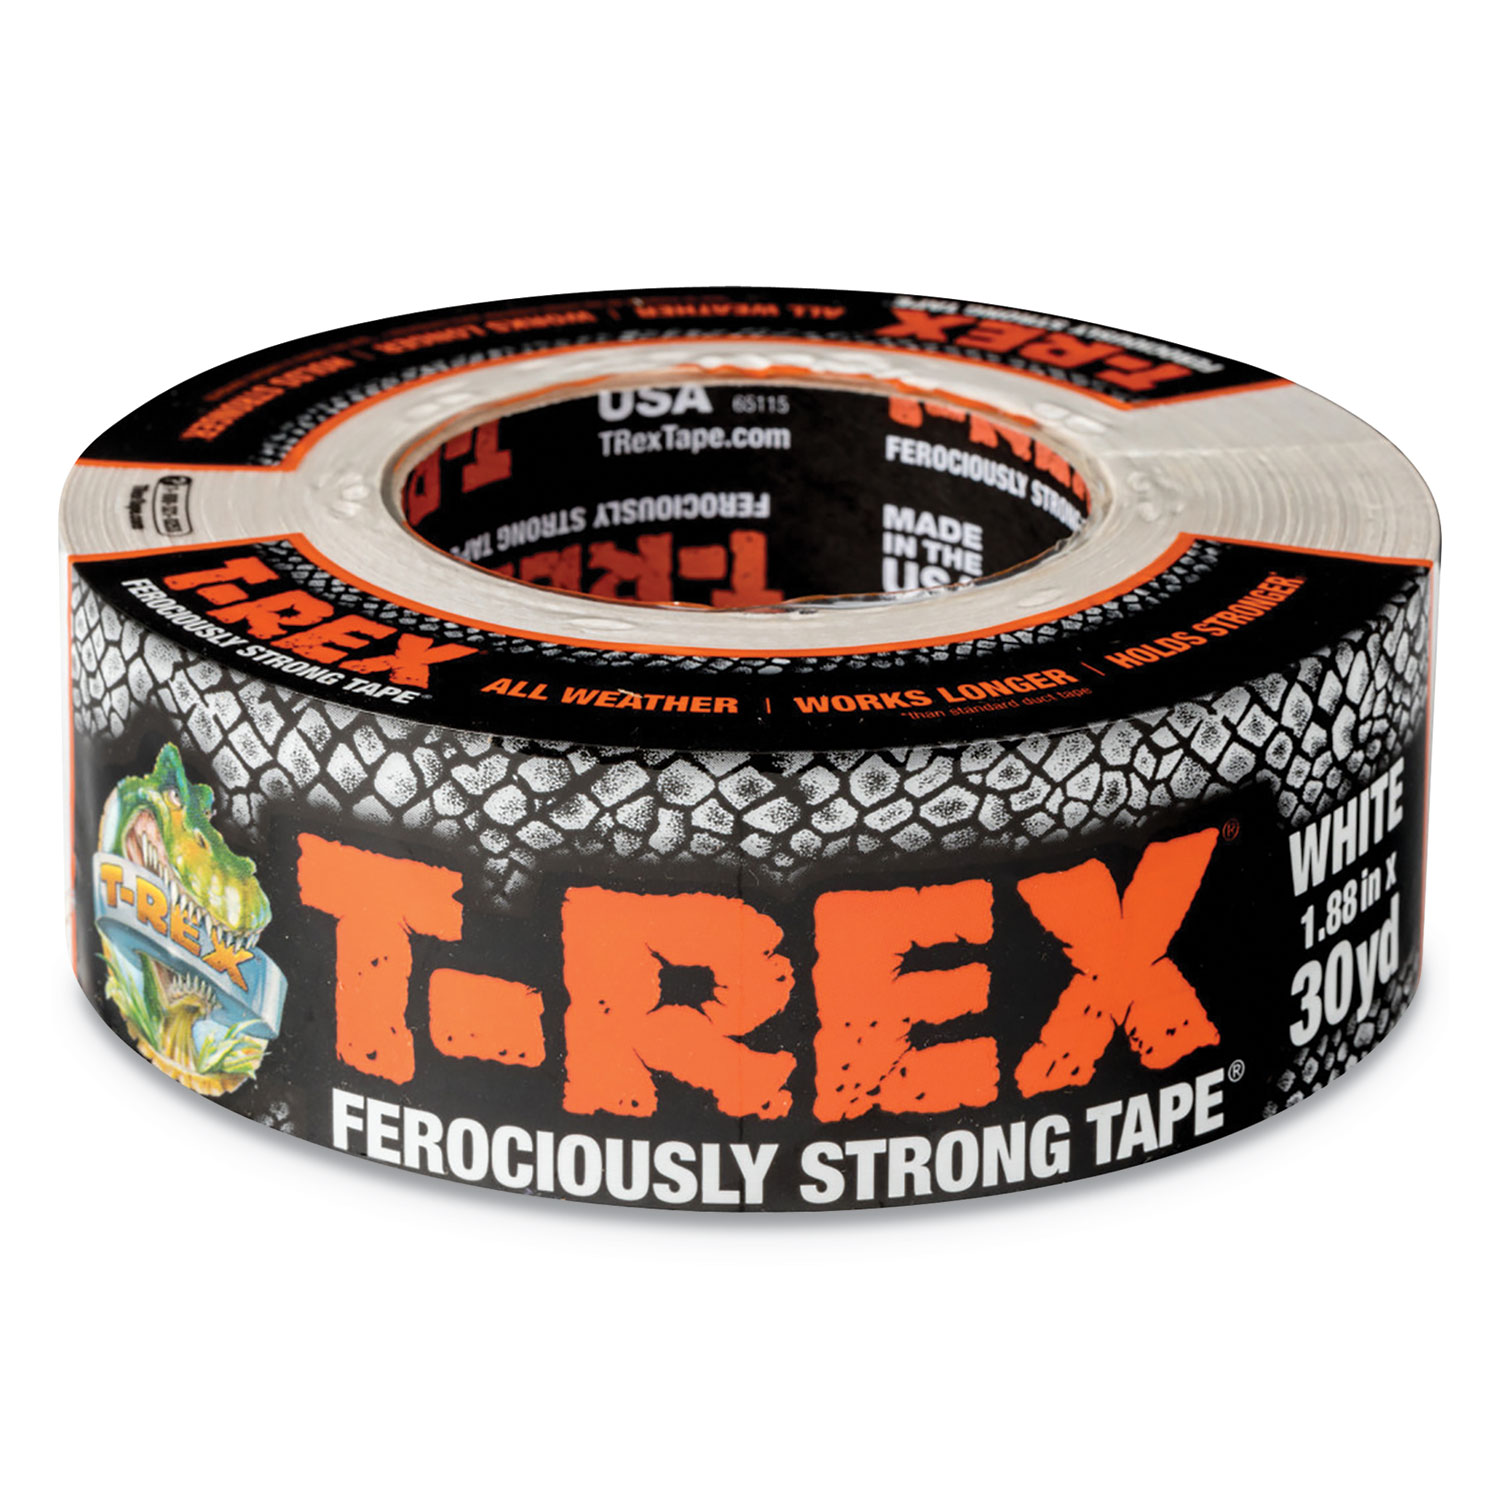  T-REX 241534 Duct Tape, 3 Core, 1.88 x 30 yds, White (DUC241534) 